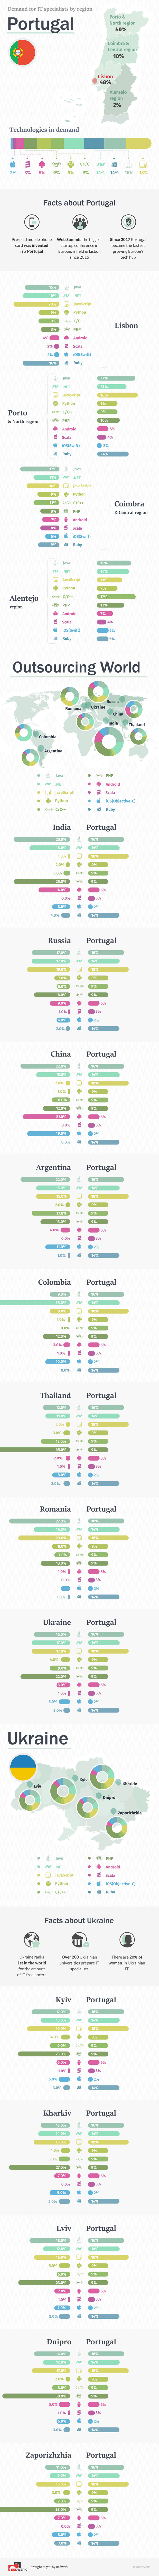 Software development technologies in demand in Portugal / infographic by Redwerk